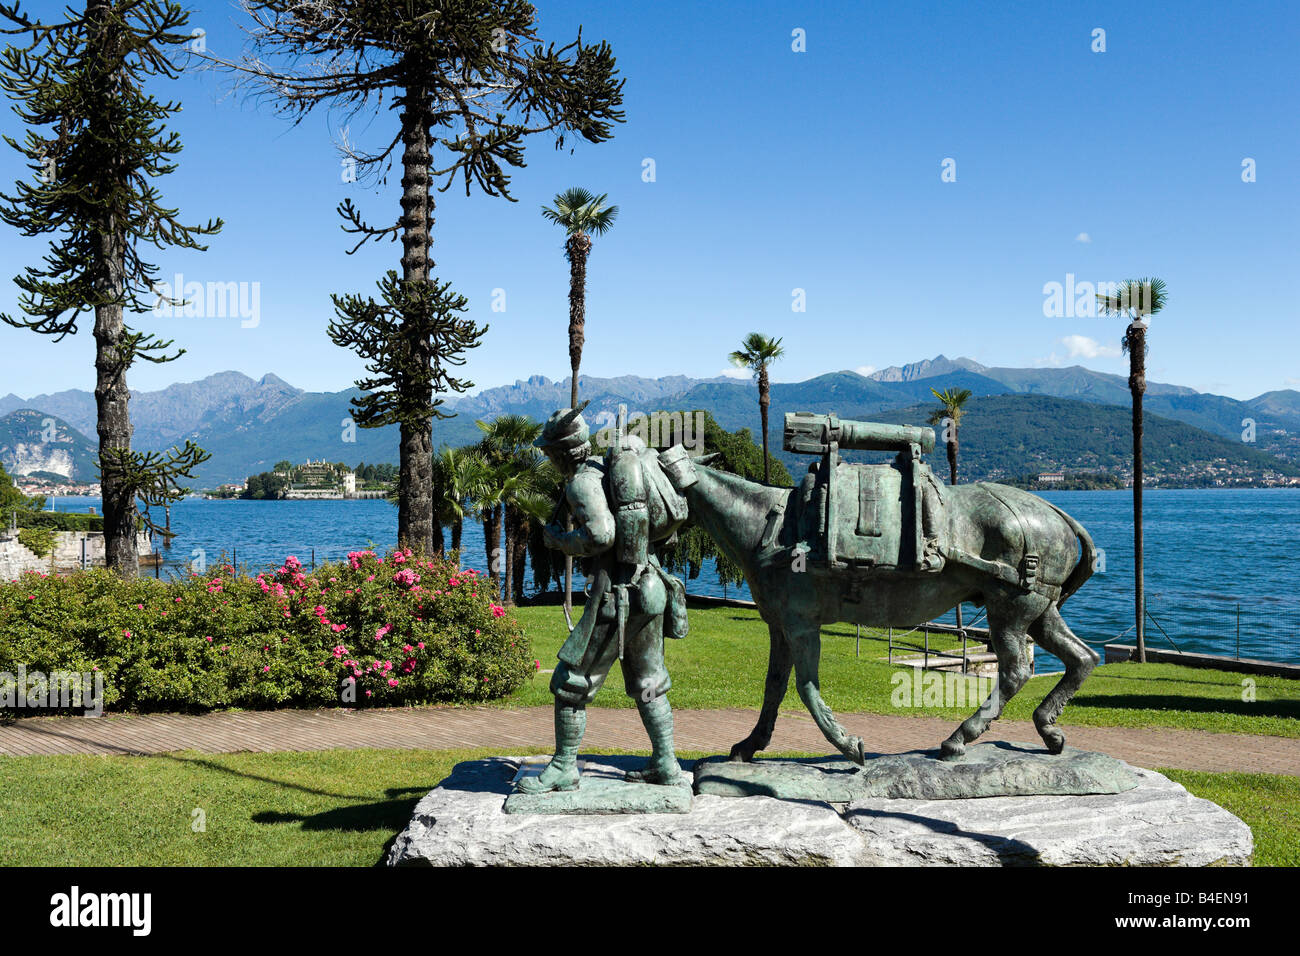 Memorial to Alpine troops on the promenade at Stresa looking towards Isole Borromee, Lake Maggiore, Italy Stock Photo